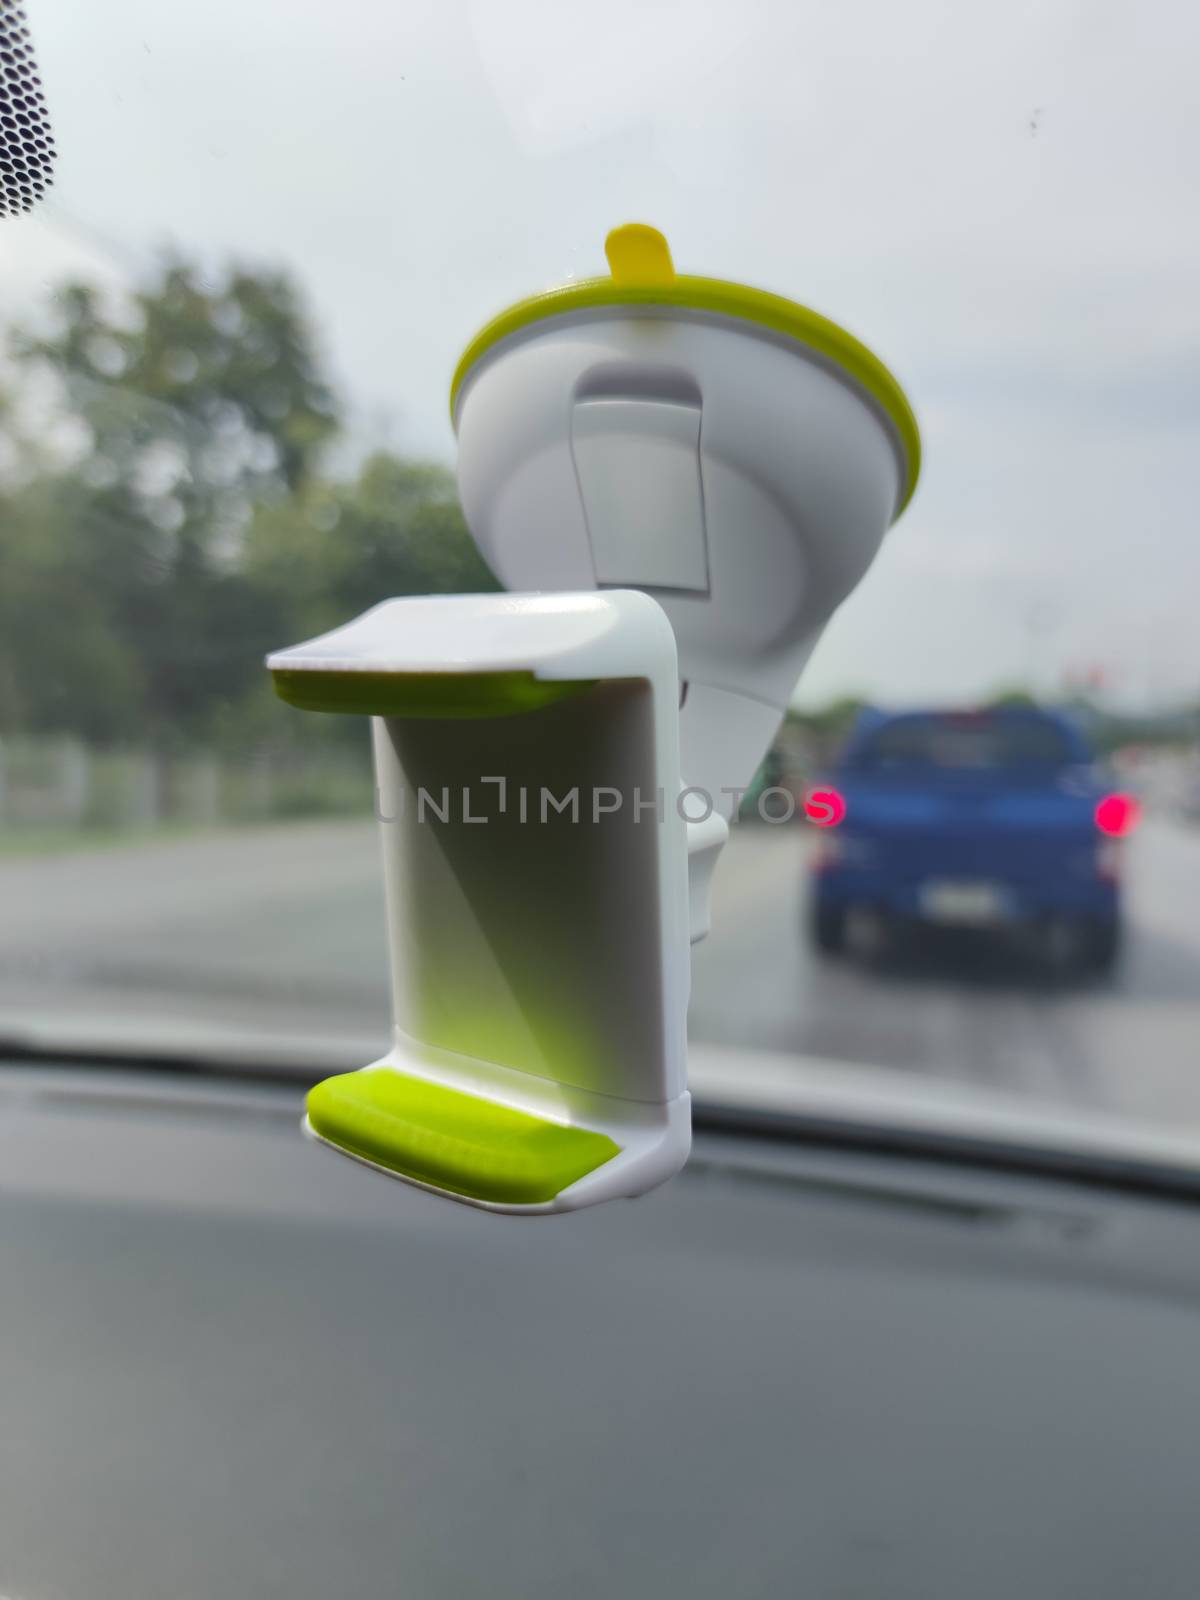 white green blank smartphone holder stuck in the windscreen of a car